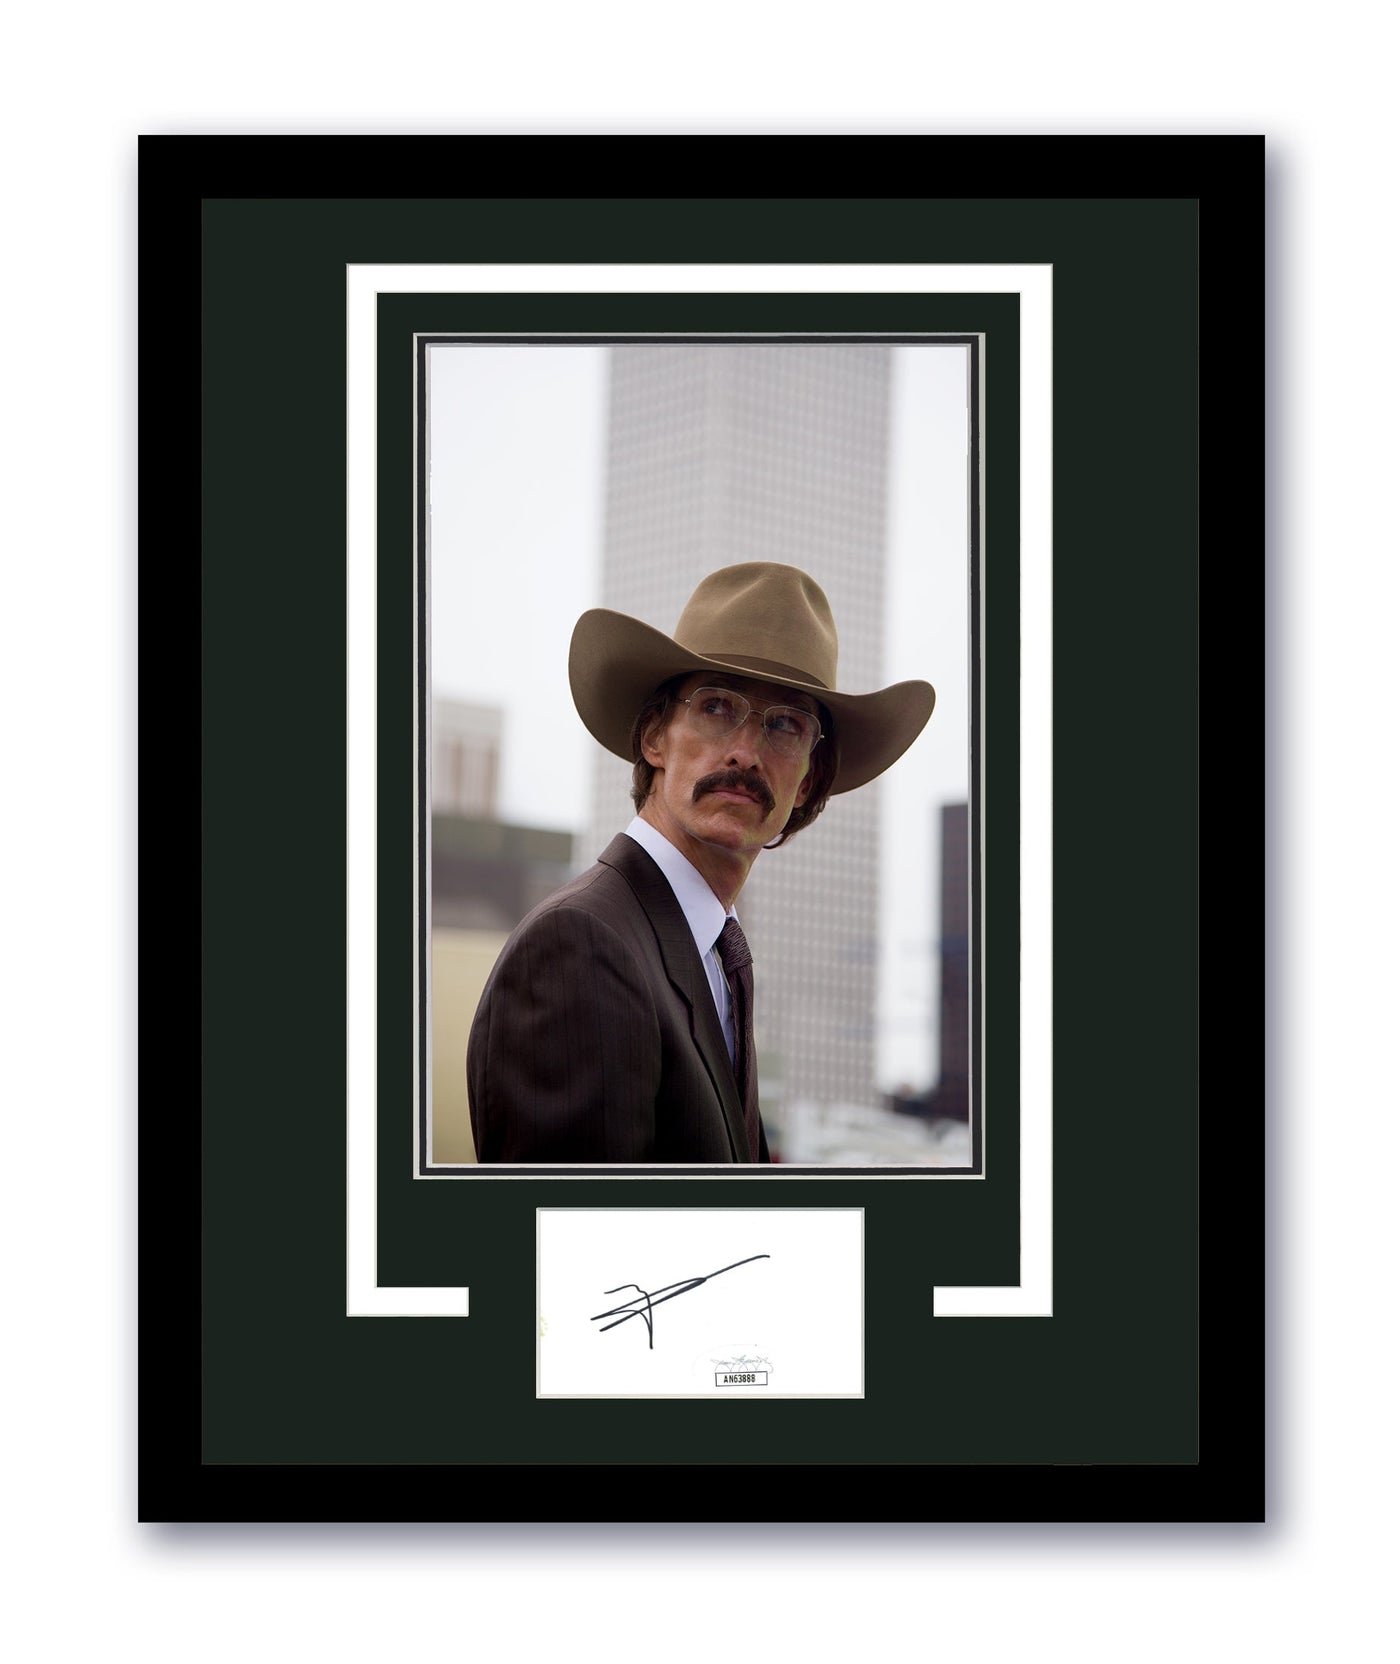 Matthew McConaughey Dallas Buyers Club Signed 11x14 Framed Autographed JSA COA 2